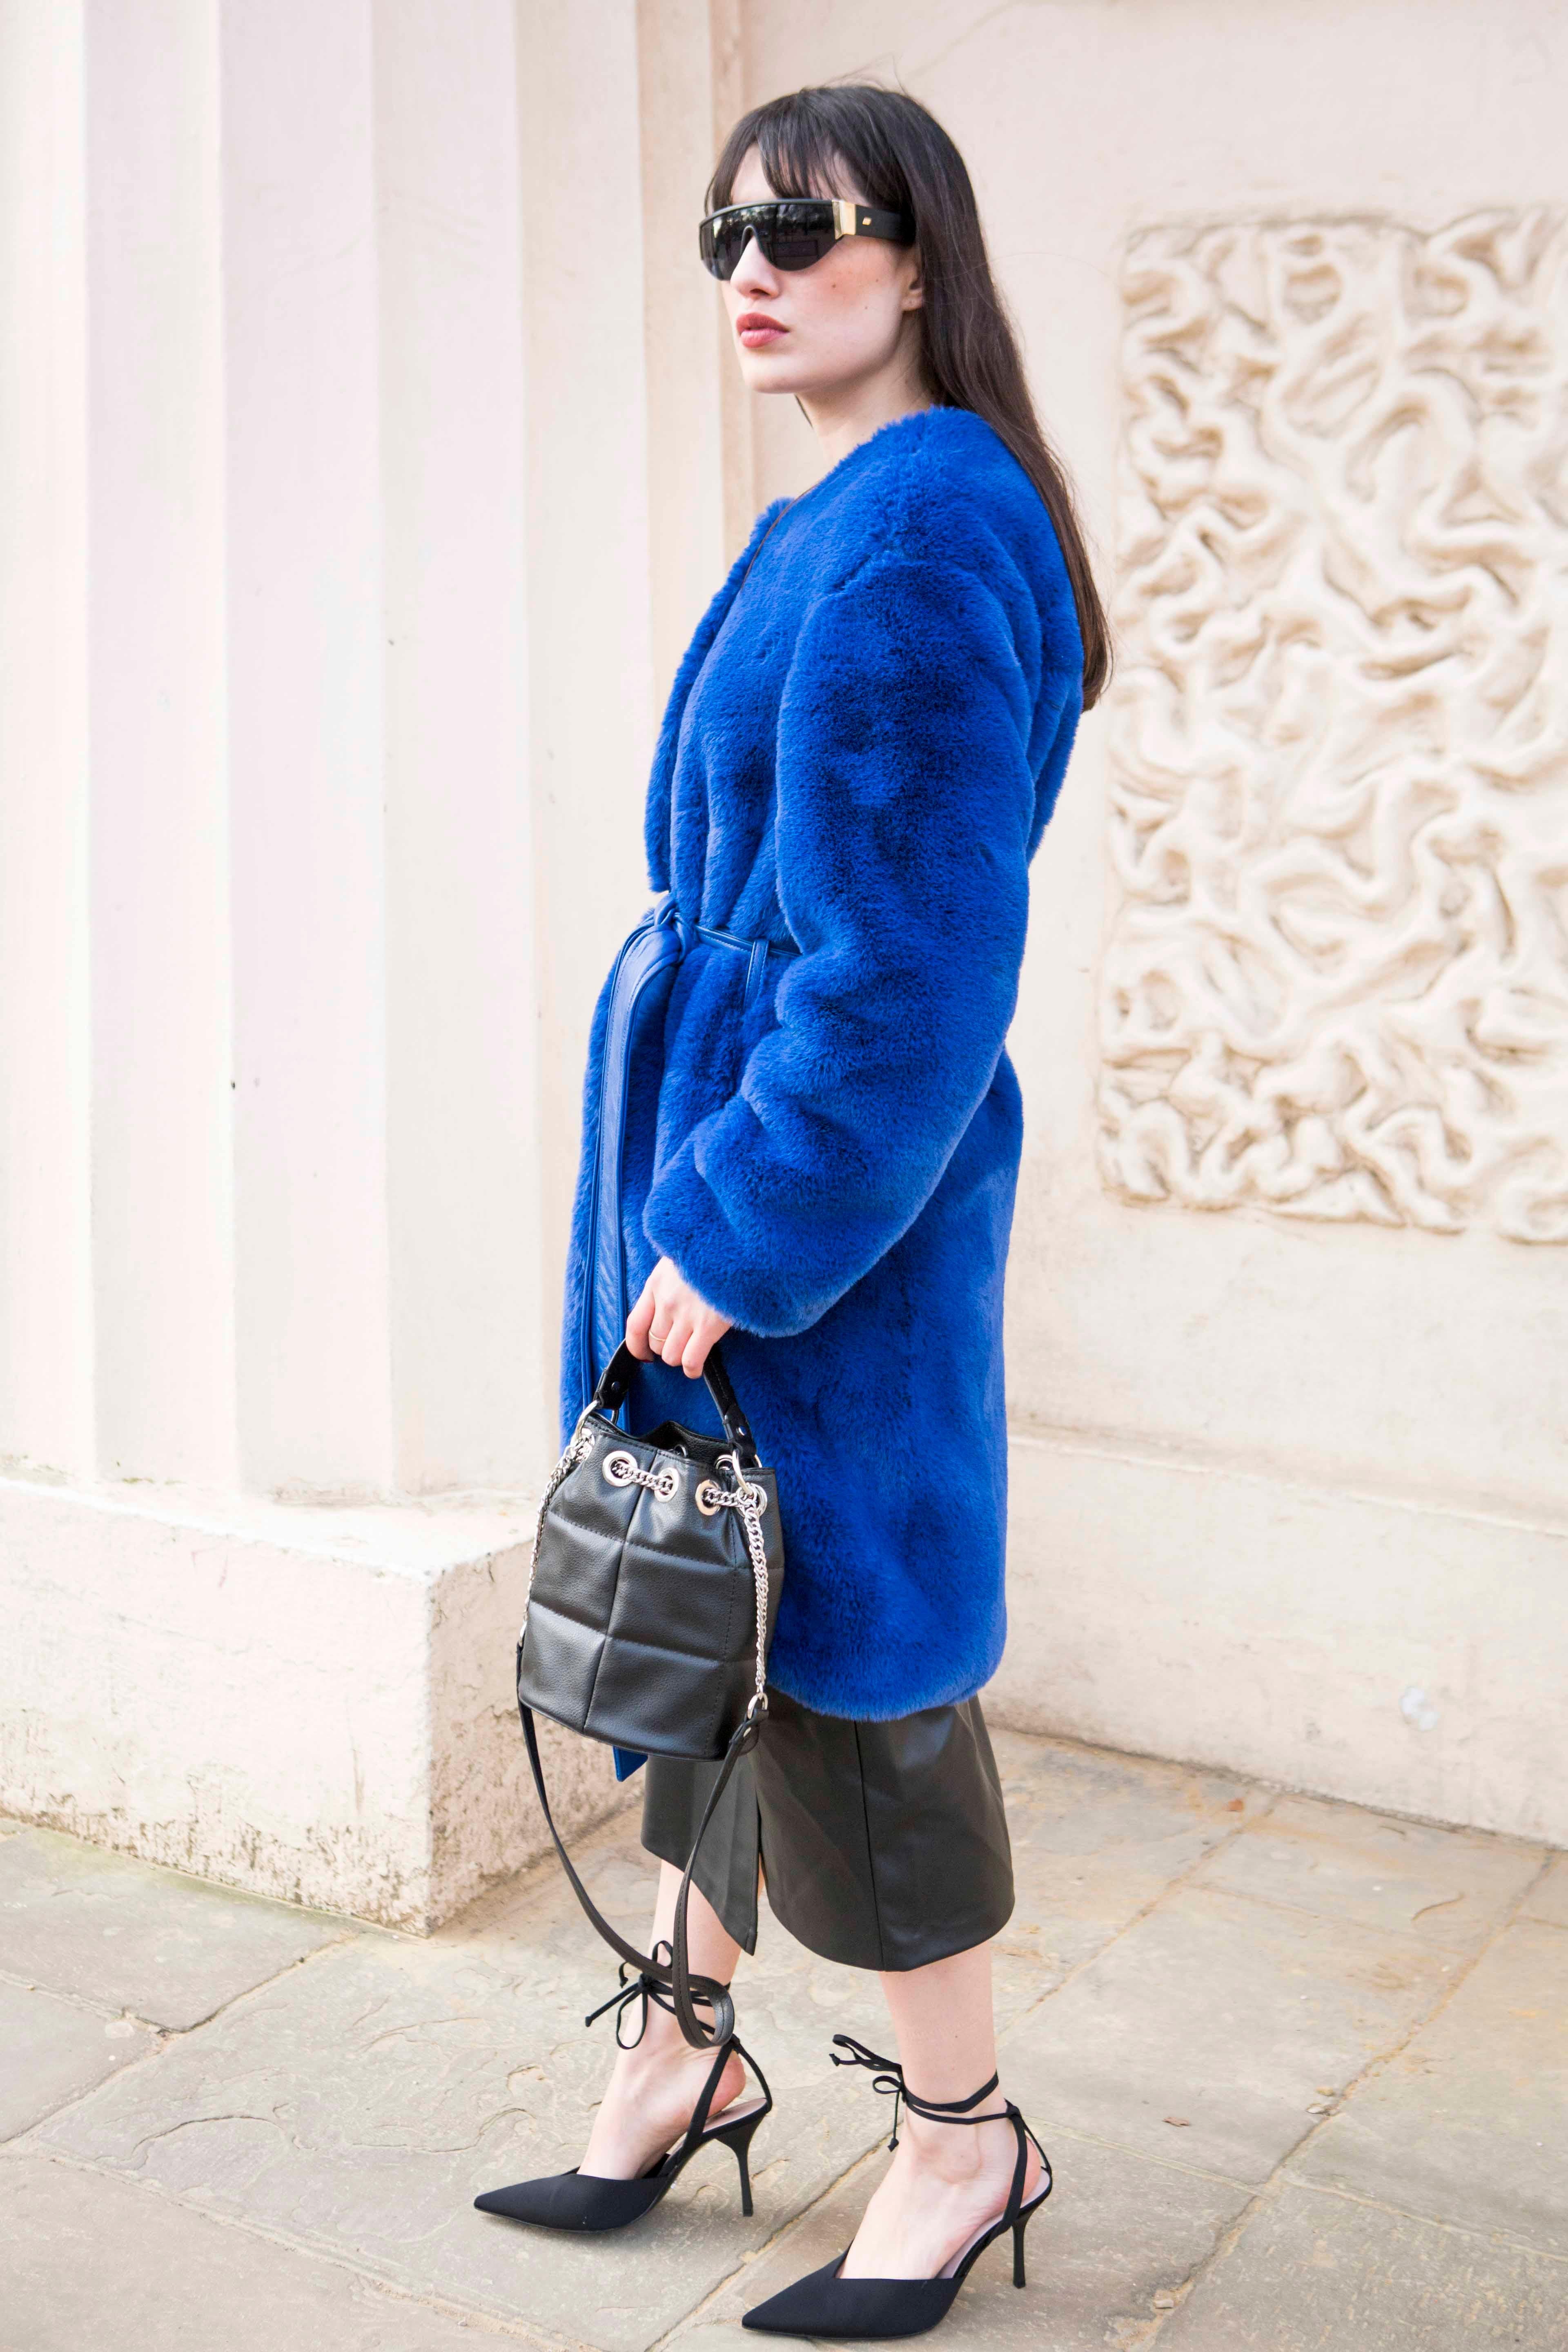 Verheyen London Serena  Collarless Faux Fur Coat in Blue - Size uk 8 For Sale 2